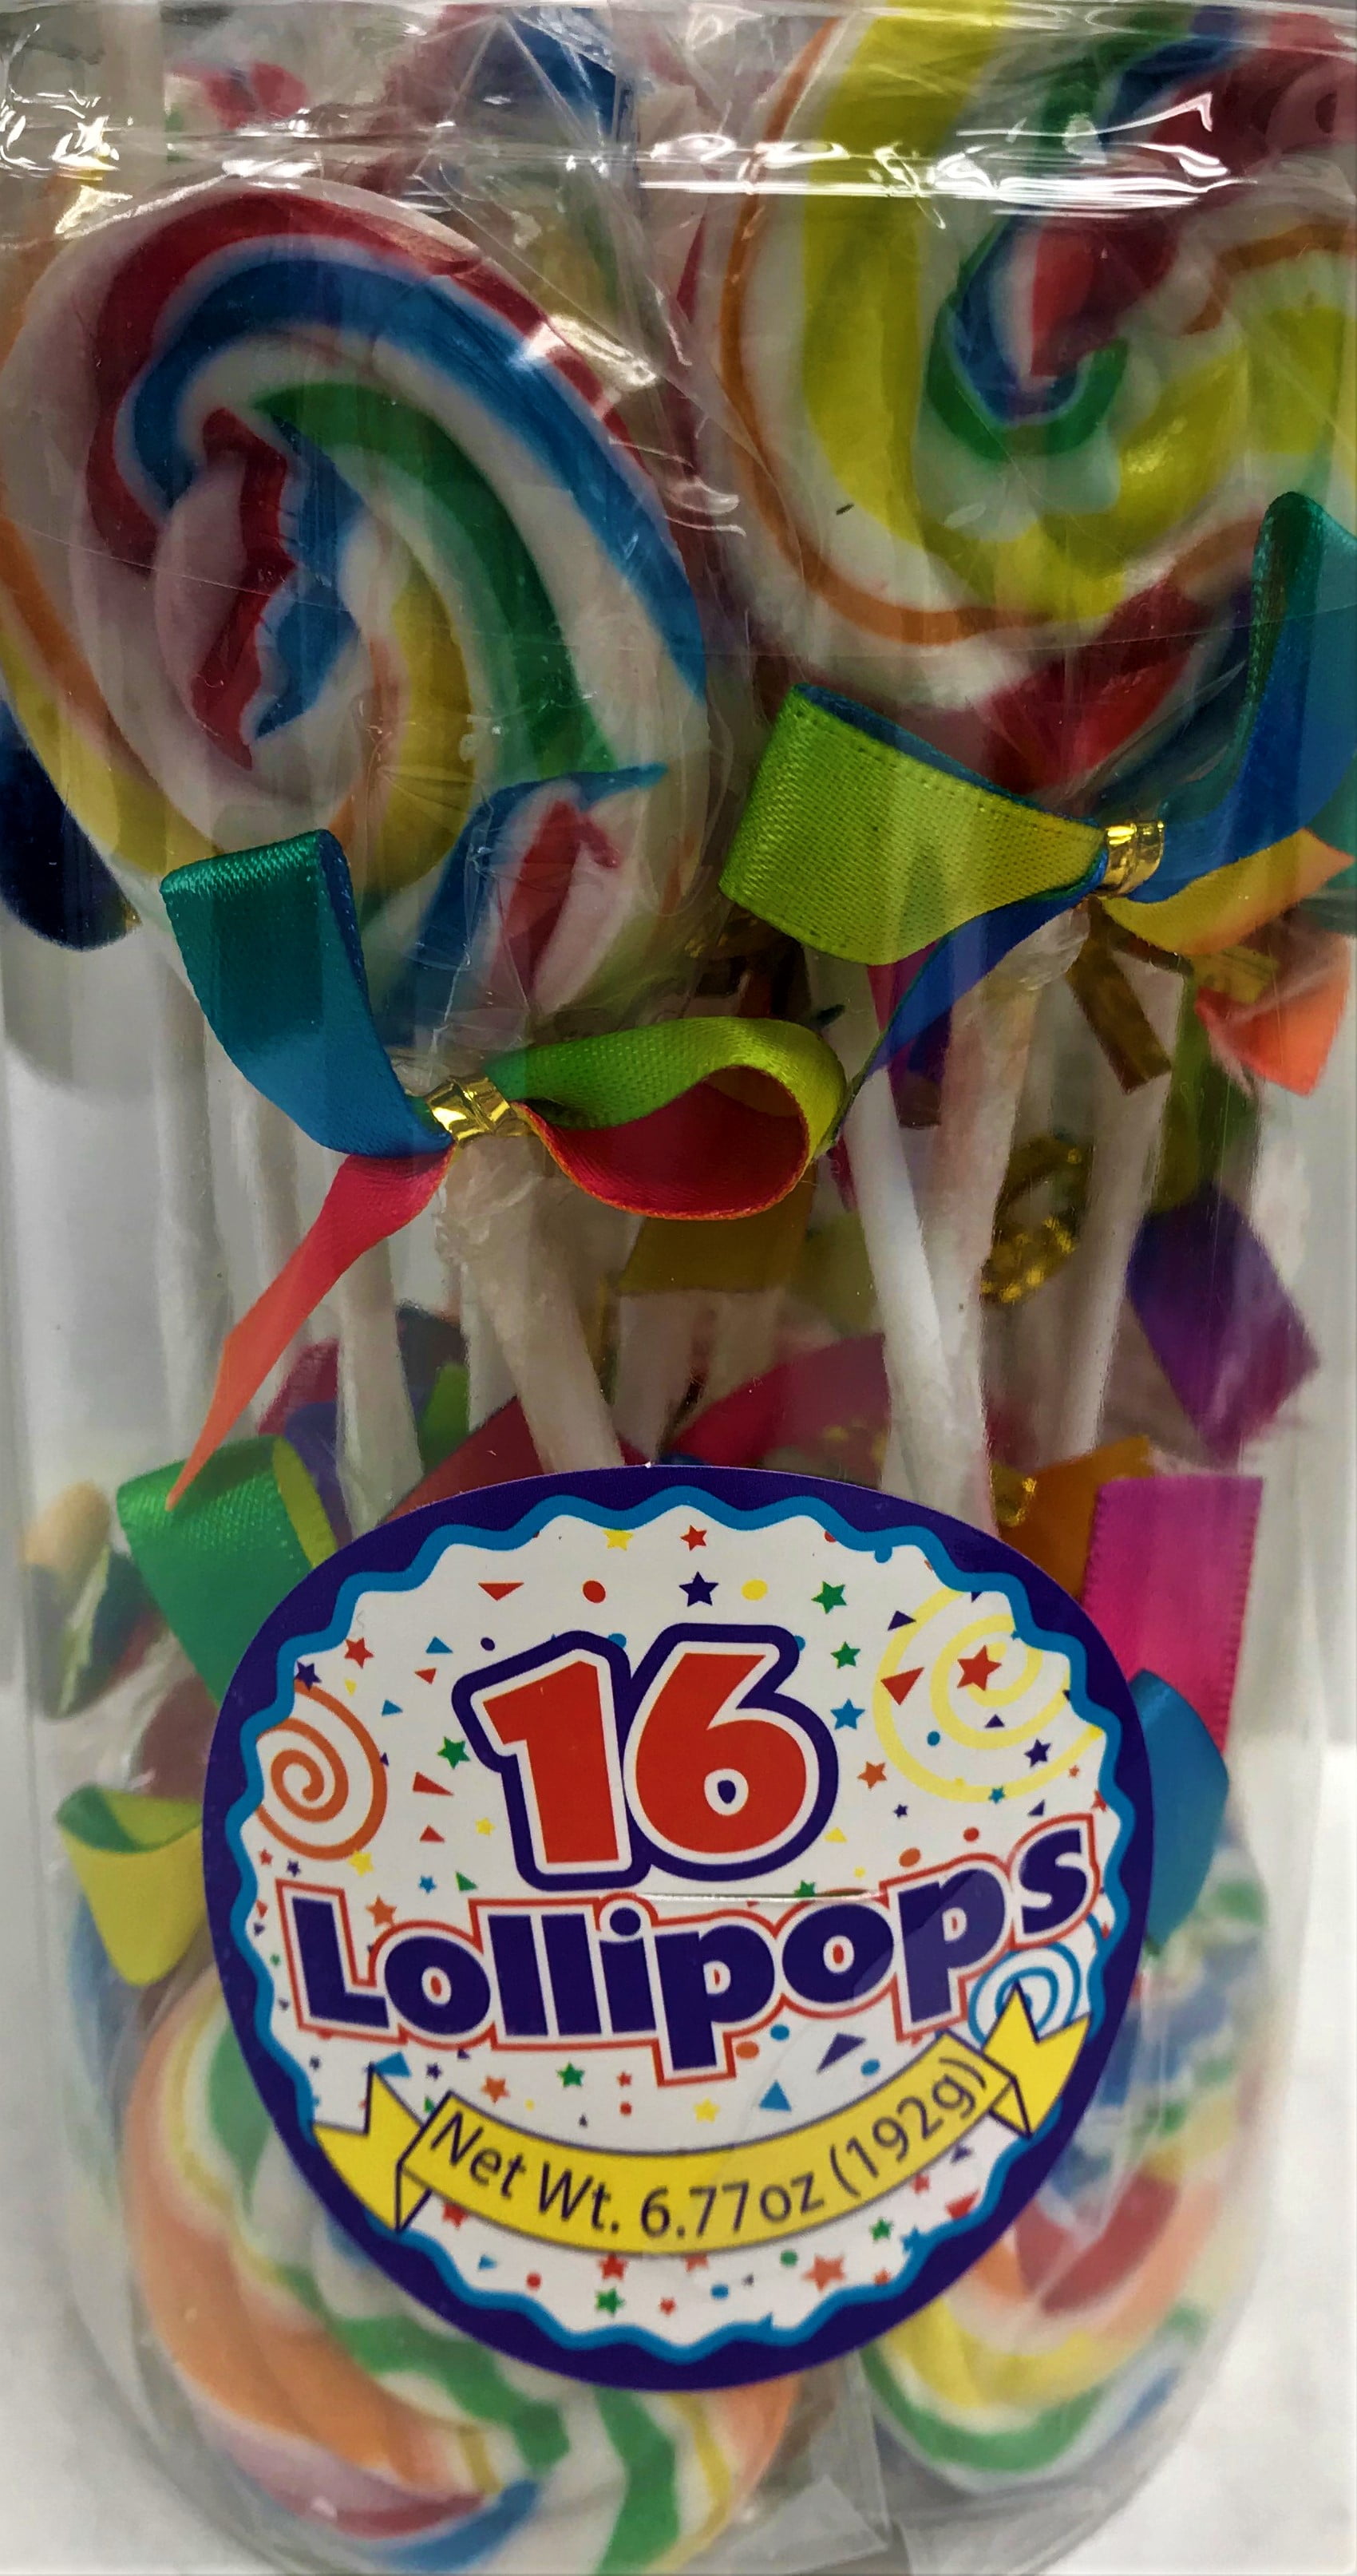 lifesavers swirl lollipops